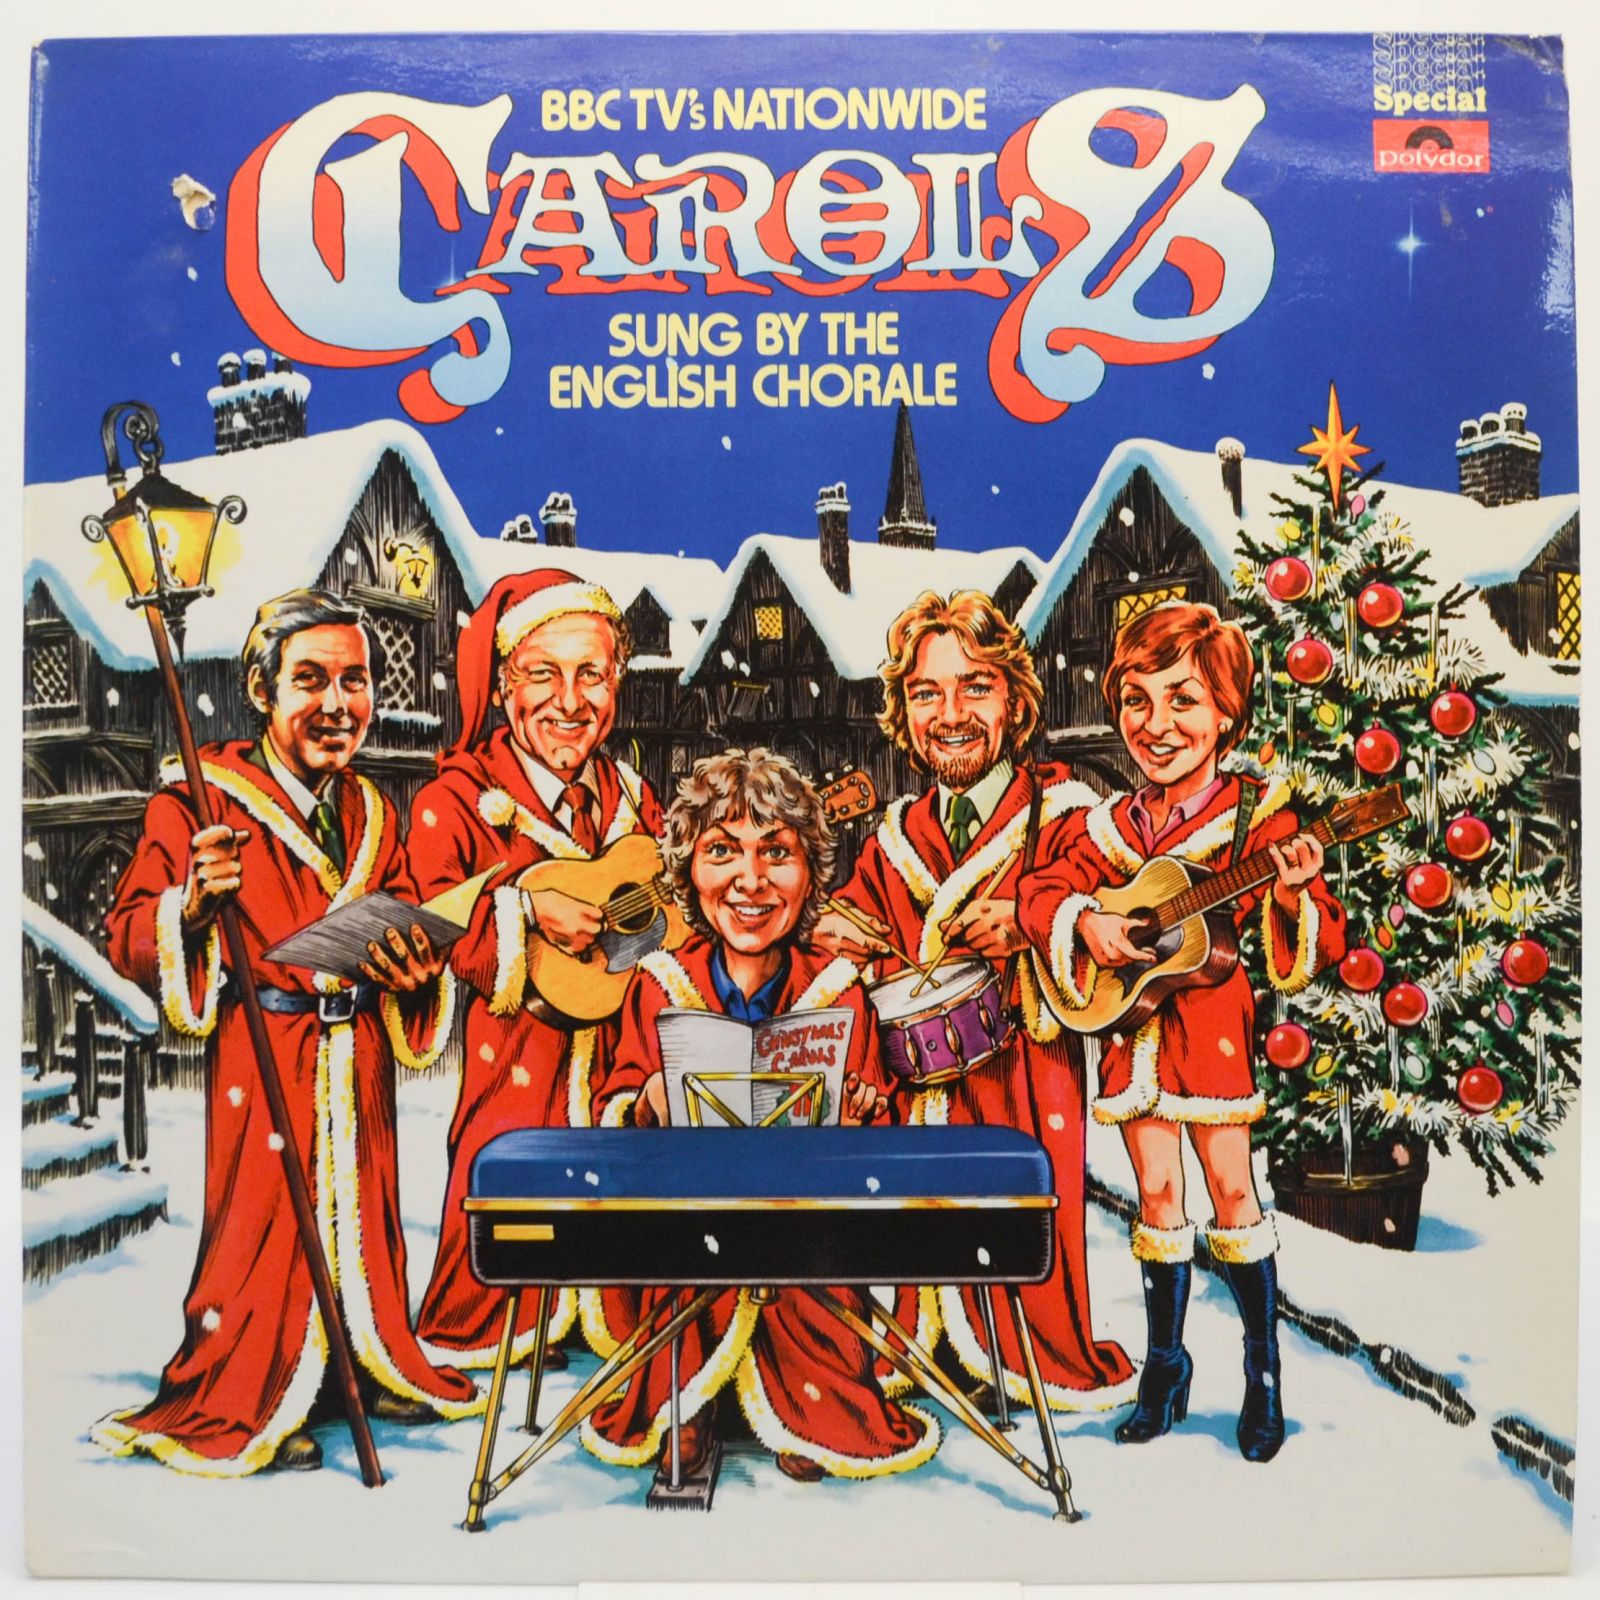 BBC TV’s Nationwide Carols, 1978